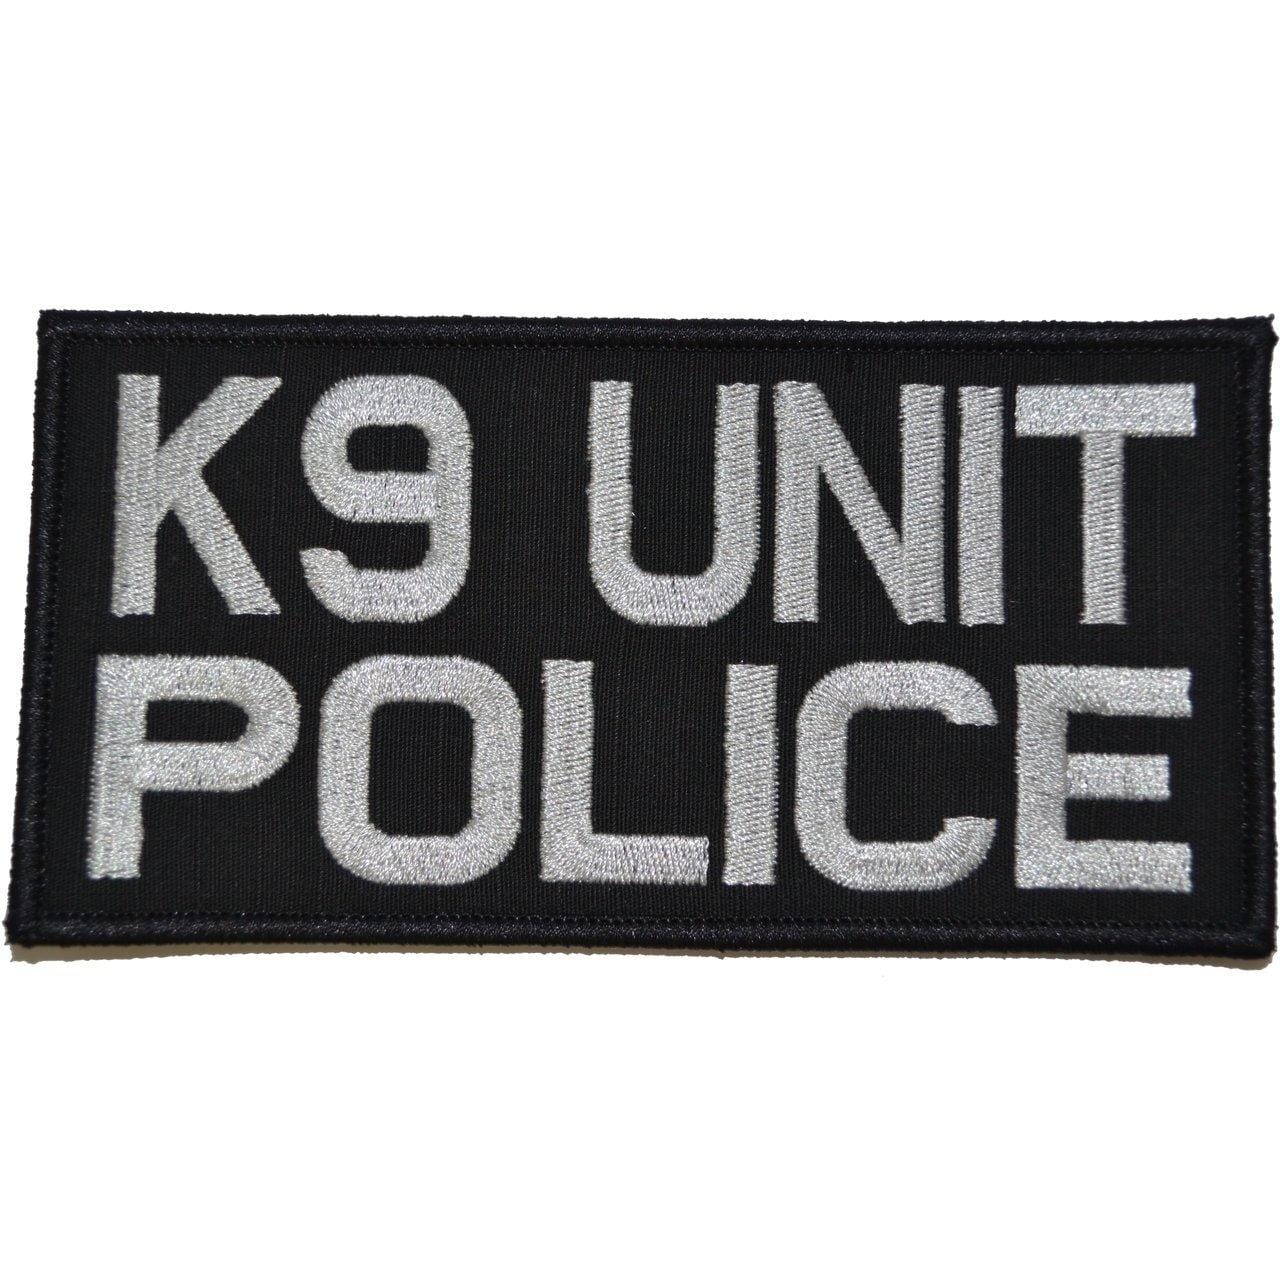 American Police K9 Custom Patch